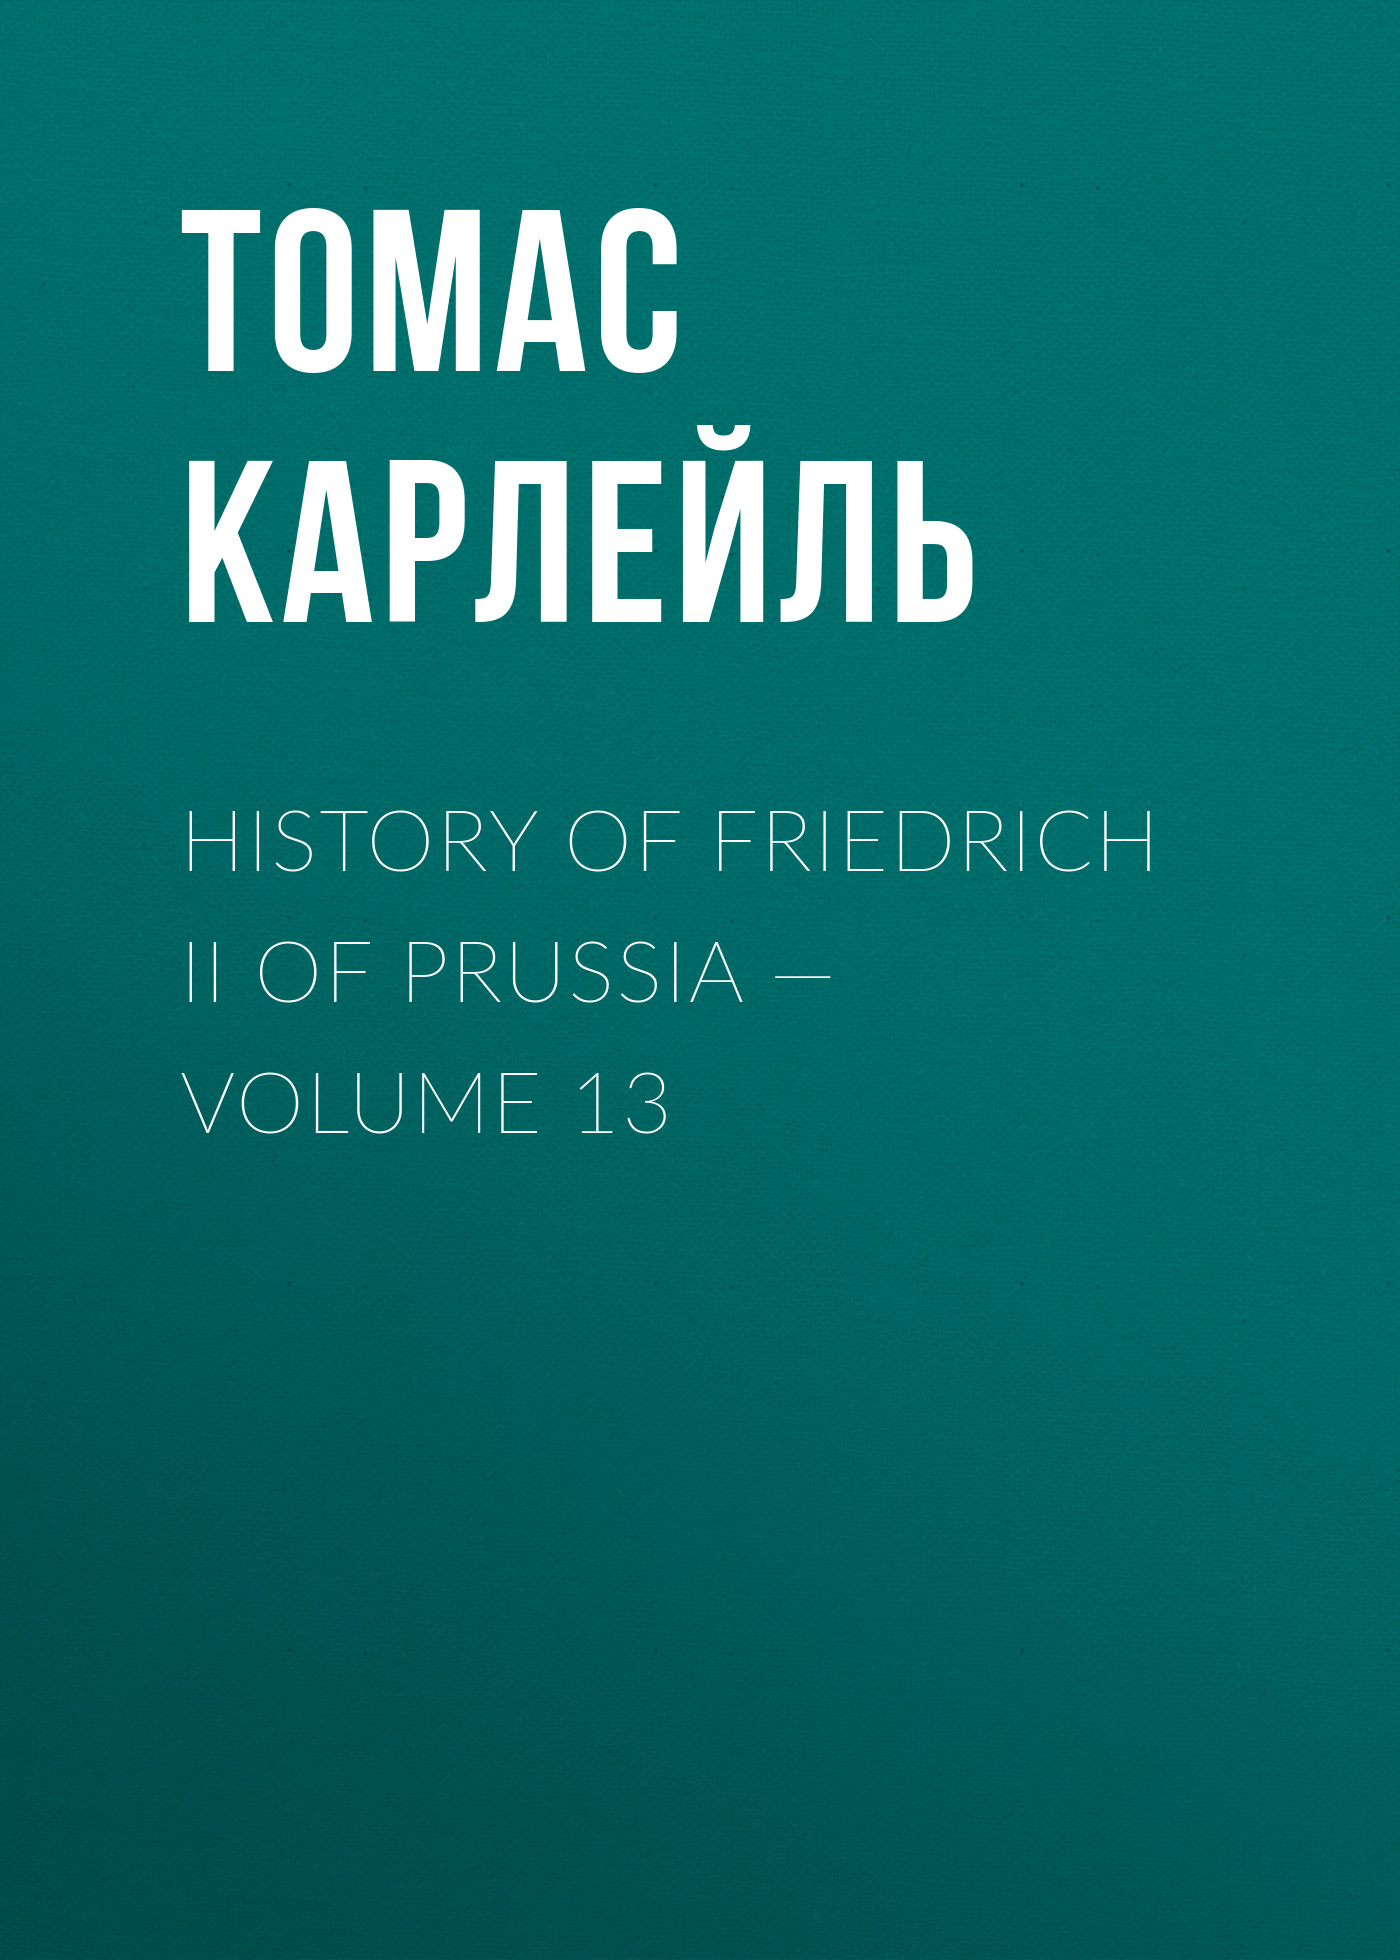 History of Friedrich II of Prussia— Volume 13